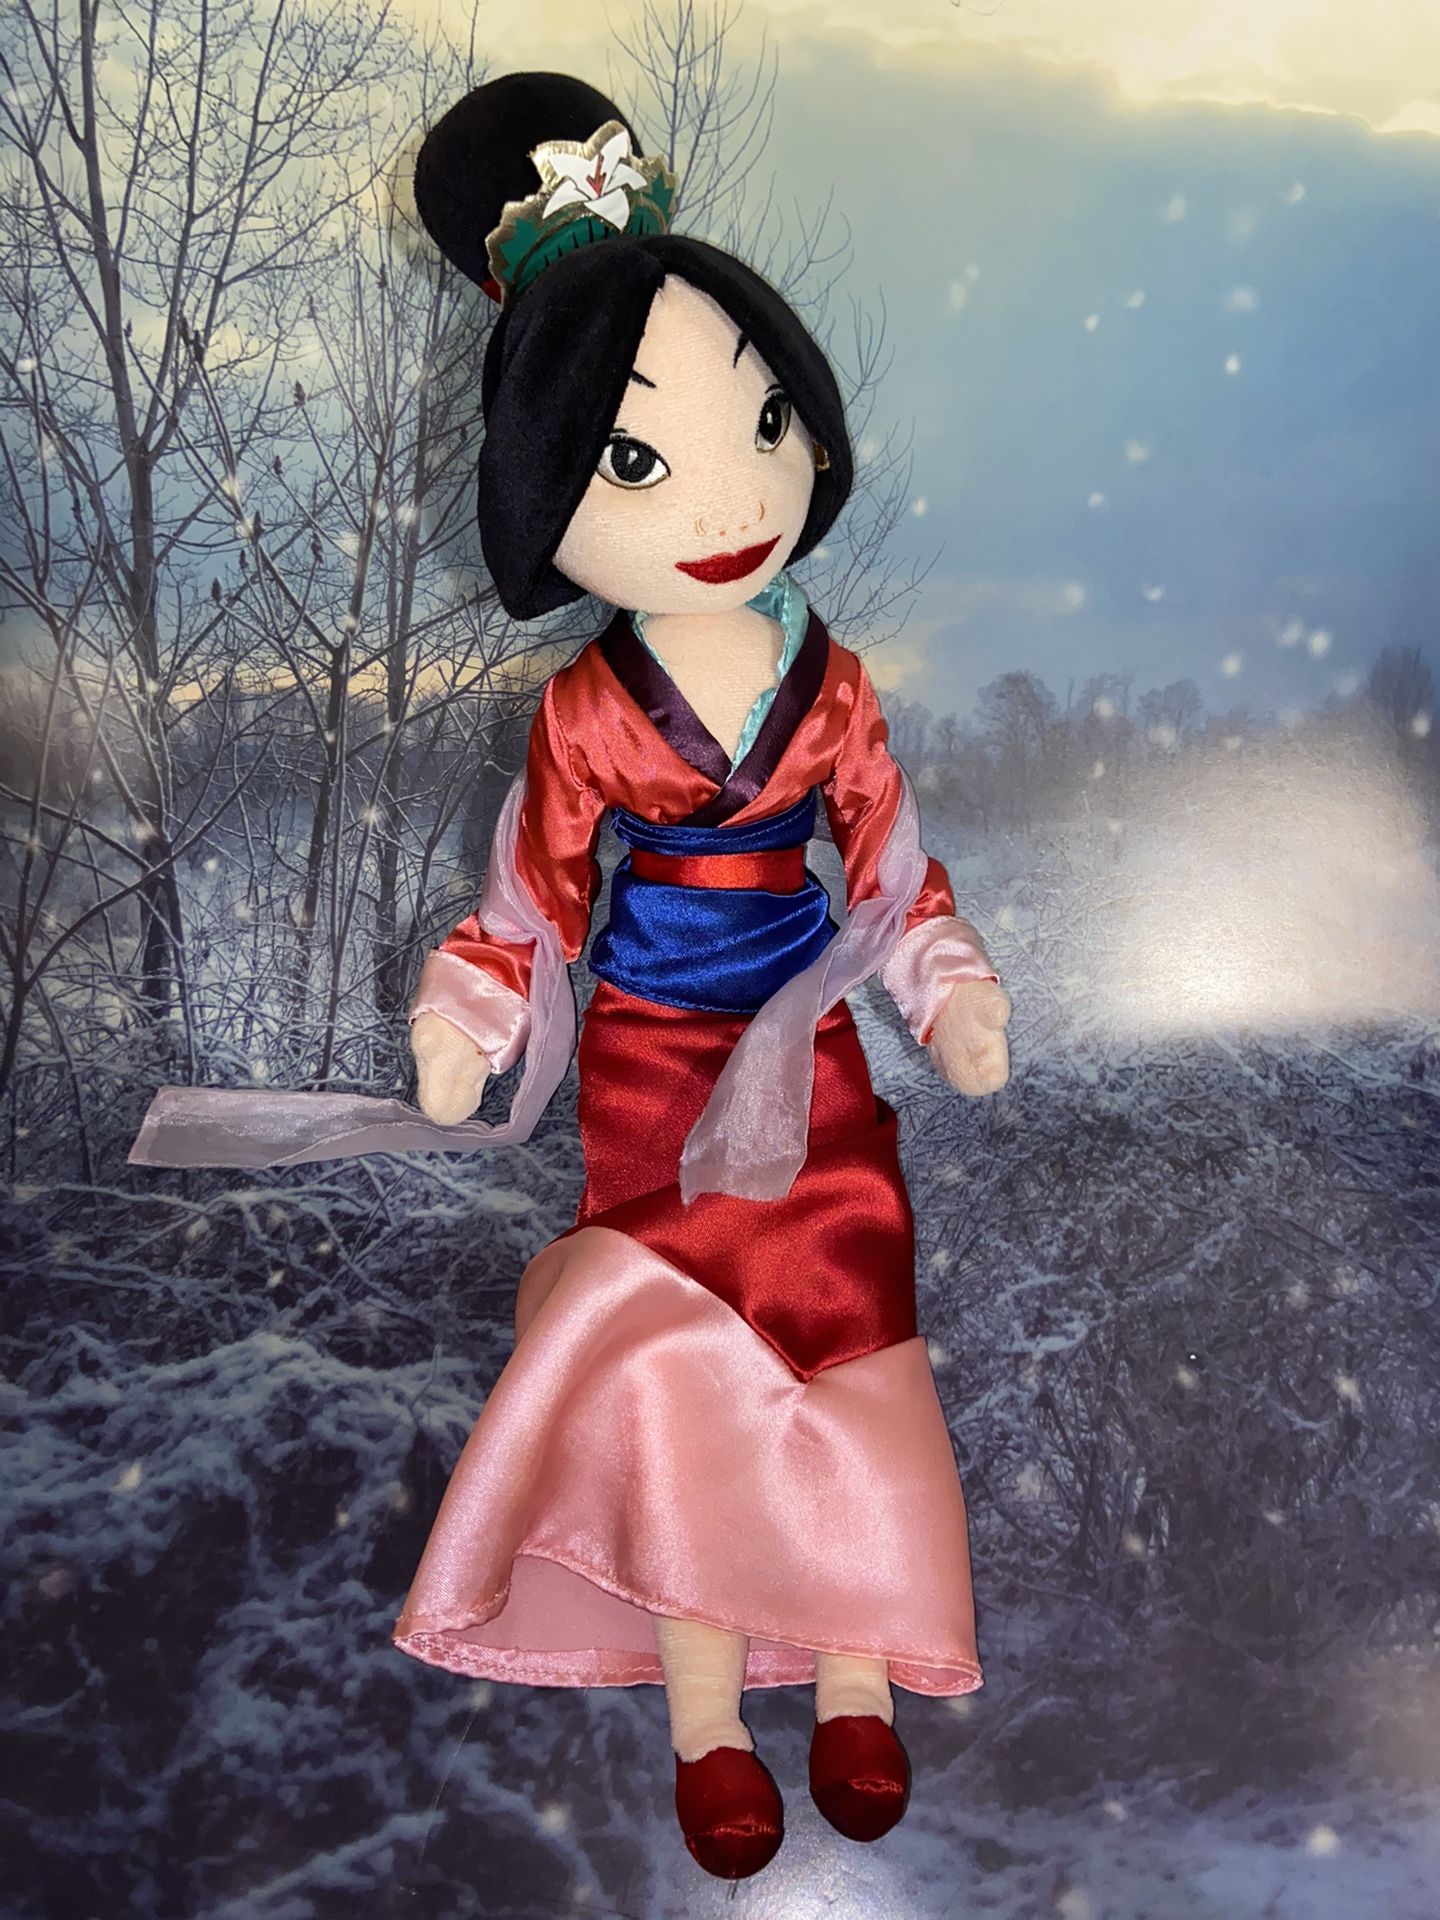 Disney Mulan approximately 22” plush doll.